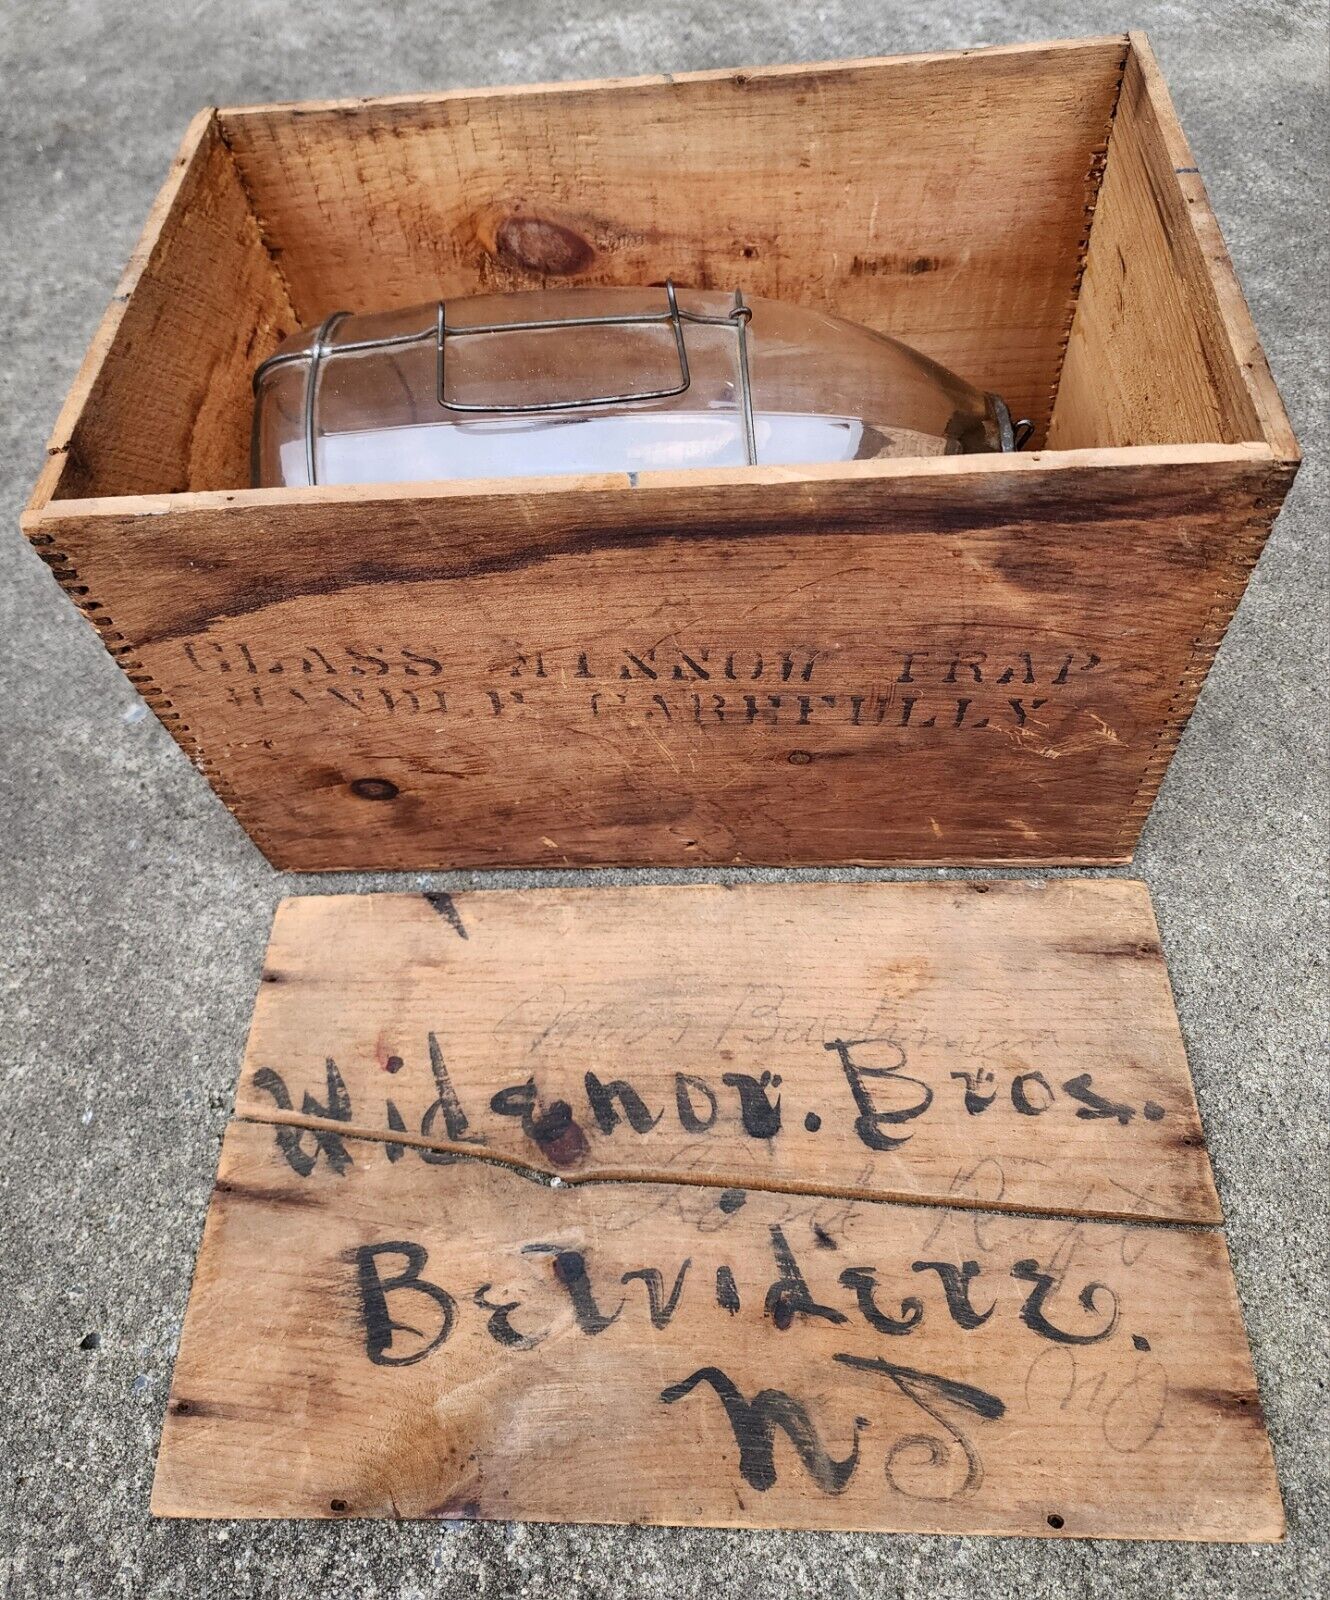 Rare find Antique Primitive Glass Minnow Trap with Original Wooden Shipping Box